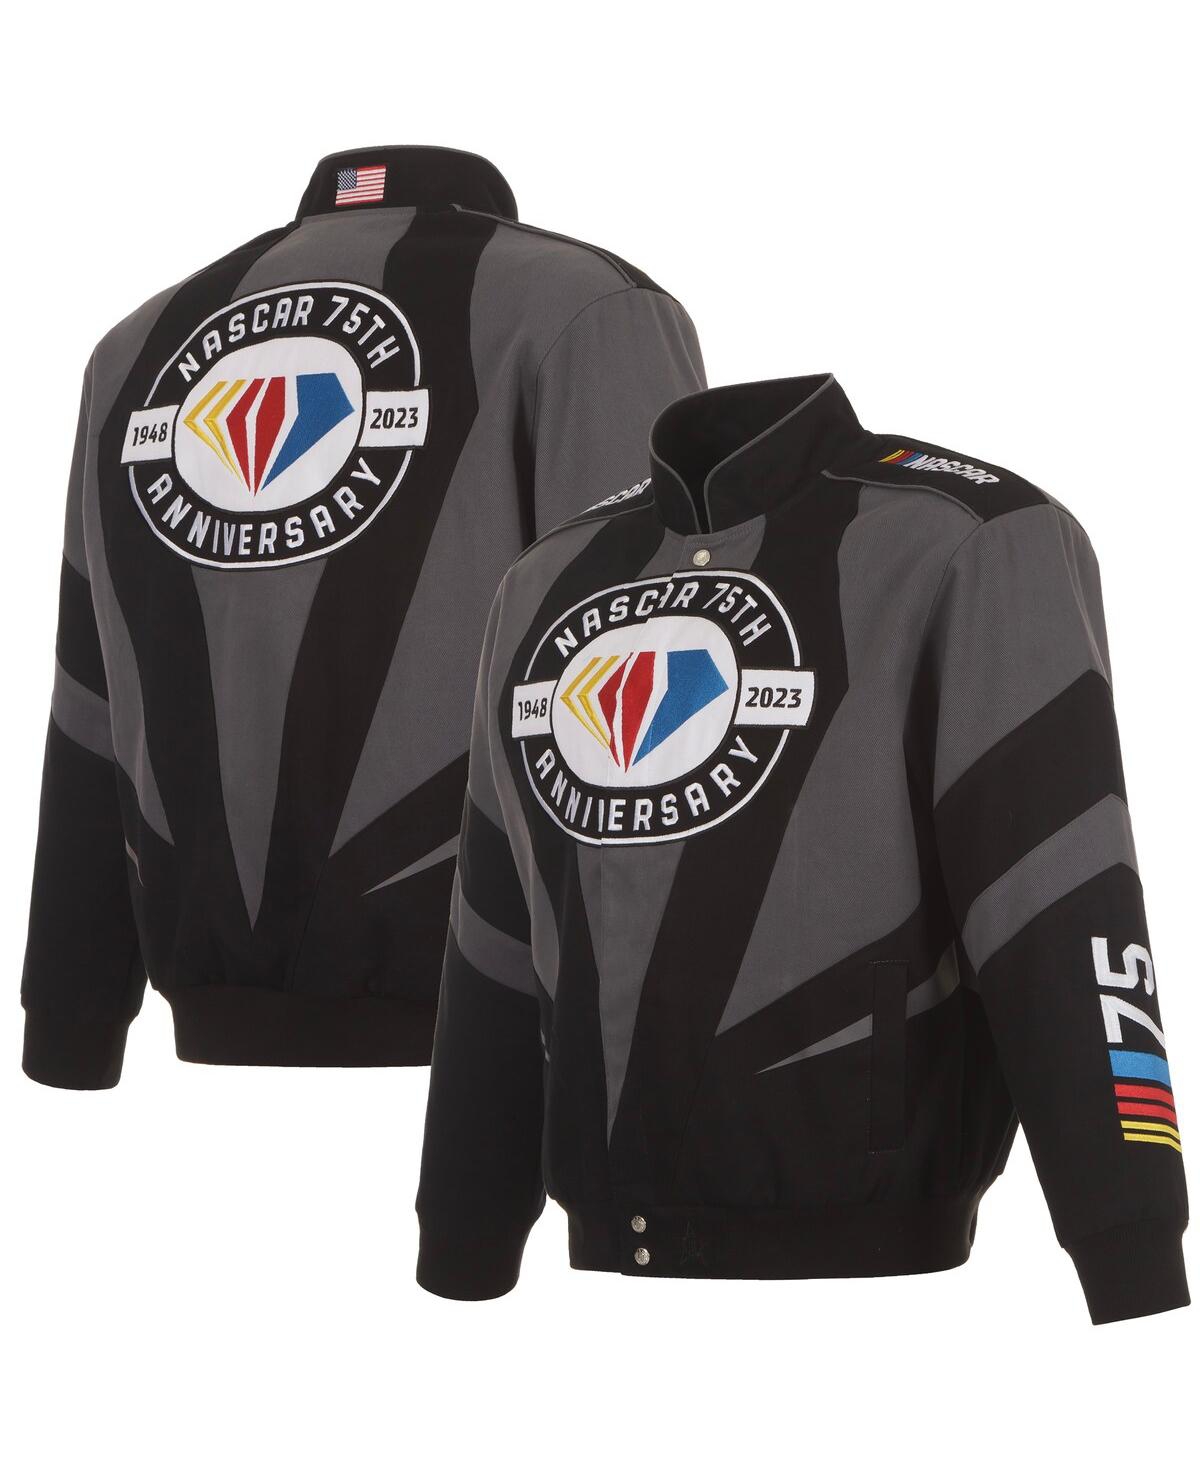 Men's Jh Design Black Nascar 75th Anniversary Twill Uniform Full-Snap Jacket - Black